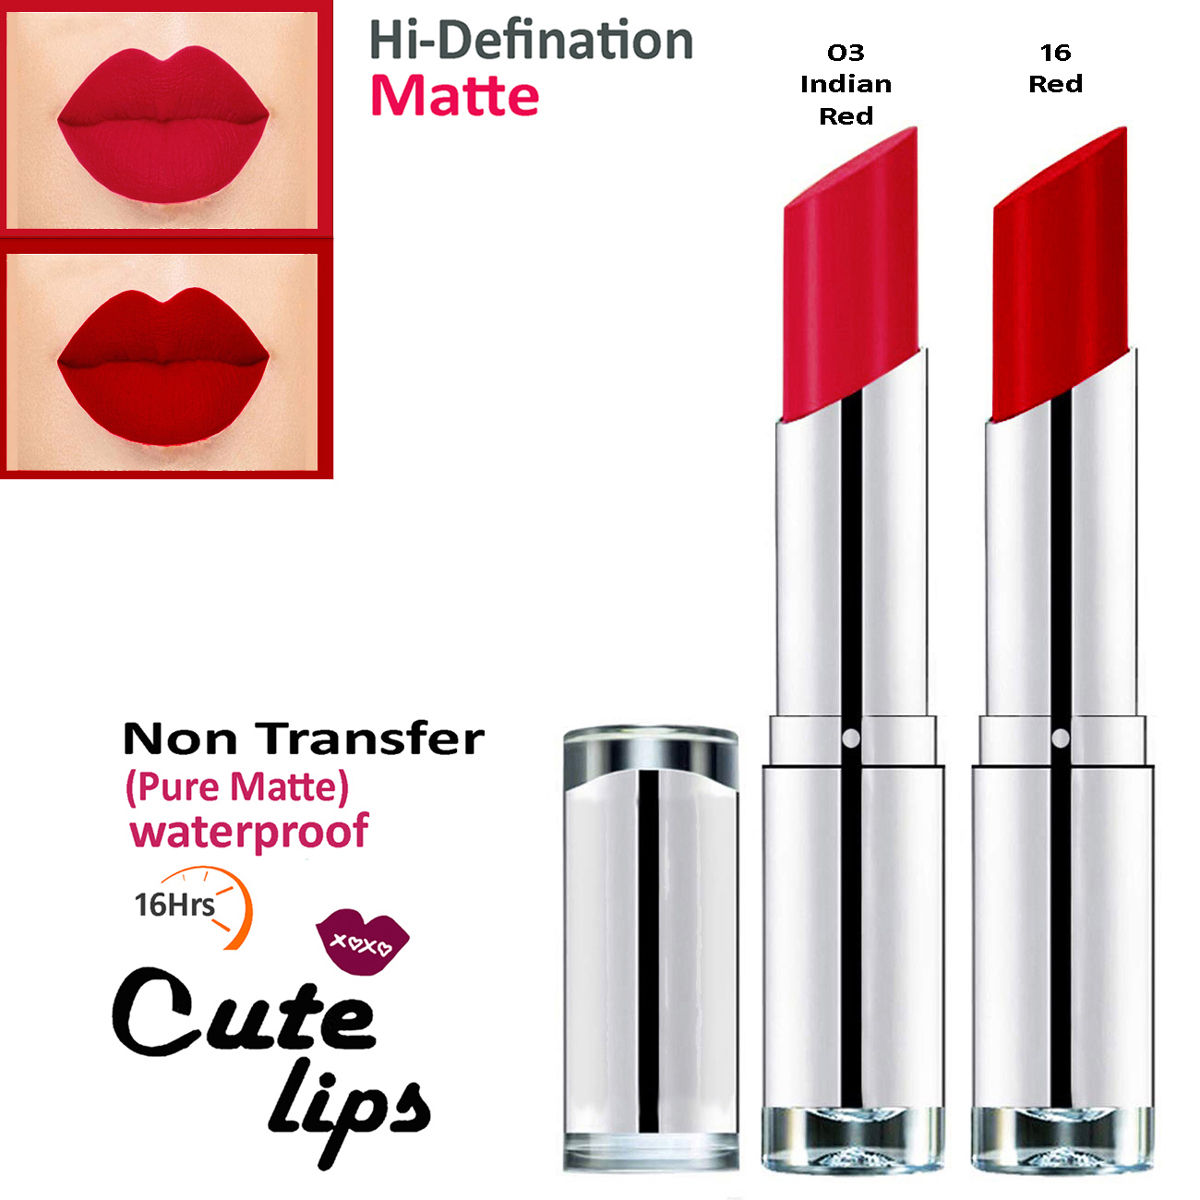 bq BLAQUE Cute Lips Non Transfer Matte Lipstick 2.4 gm each - 03 ...